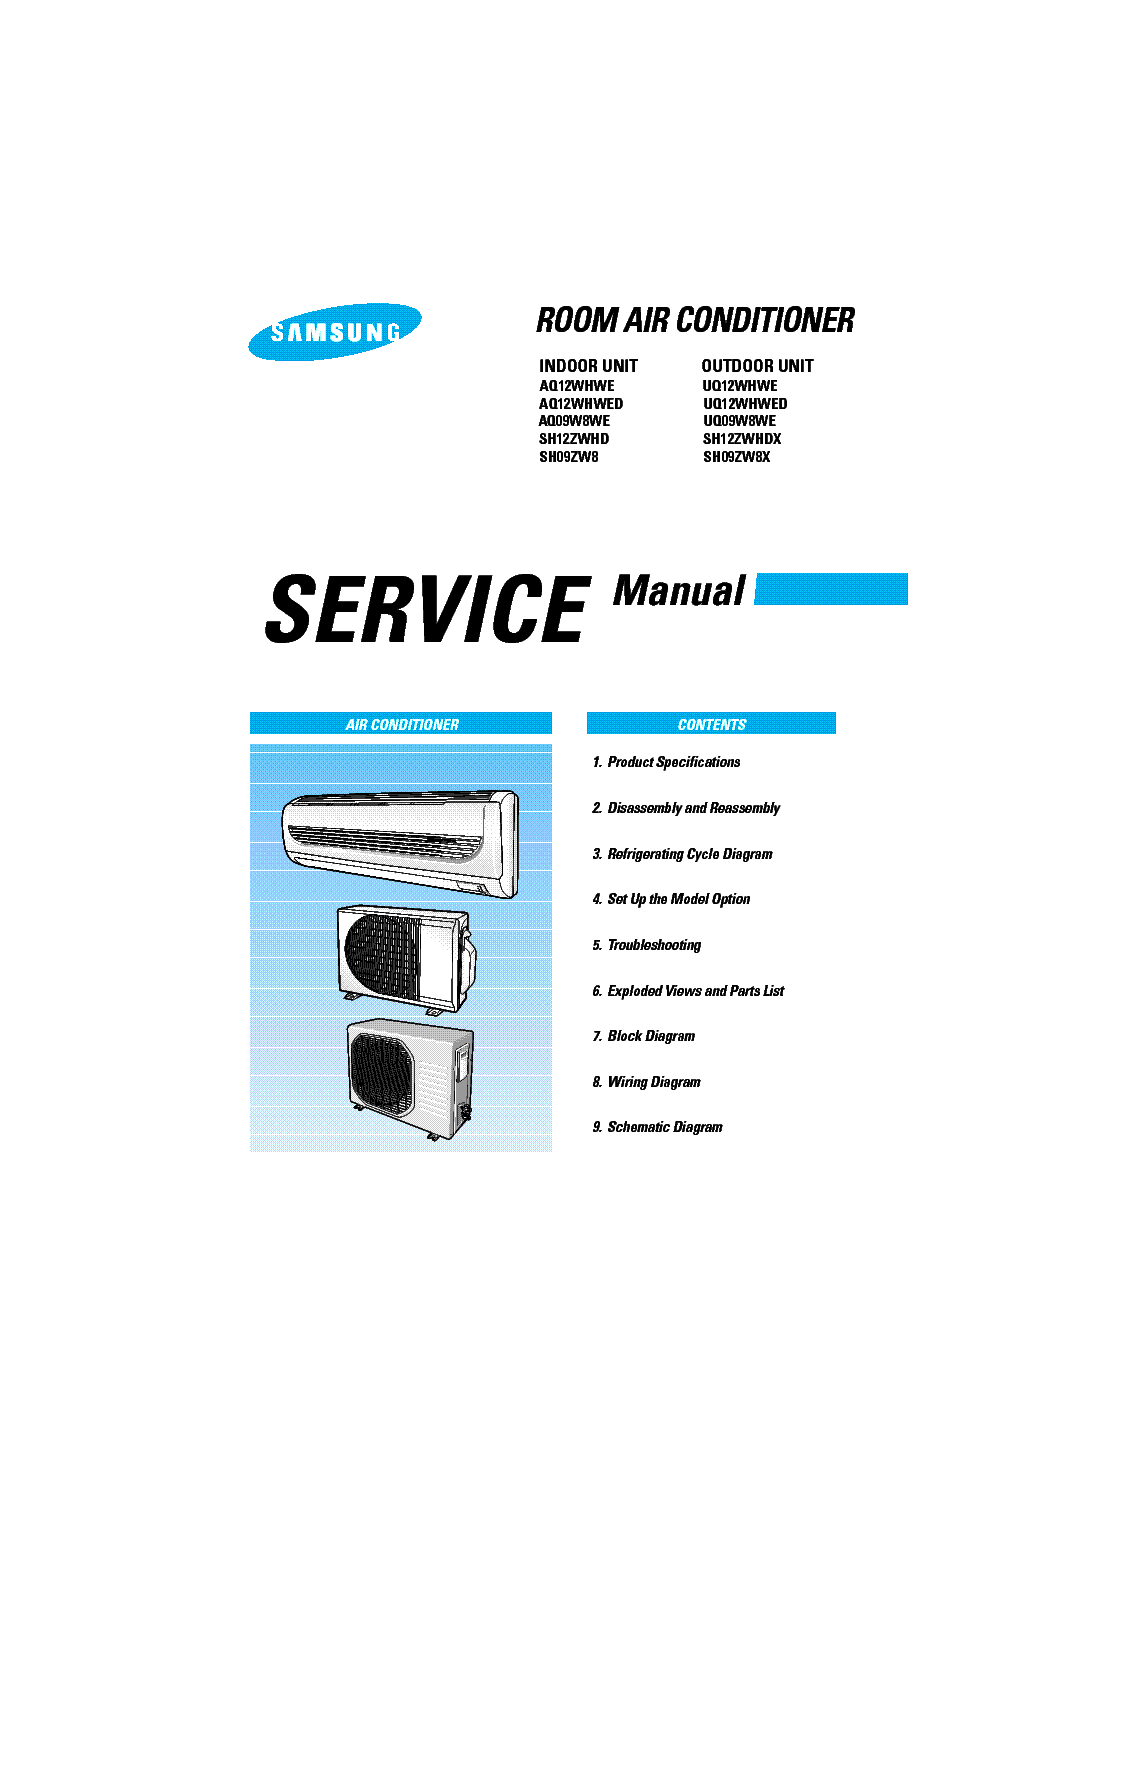 Samsung Sh12zwhd Service Manual